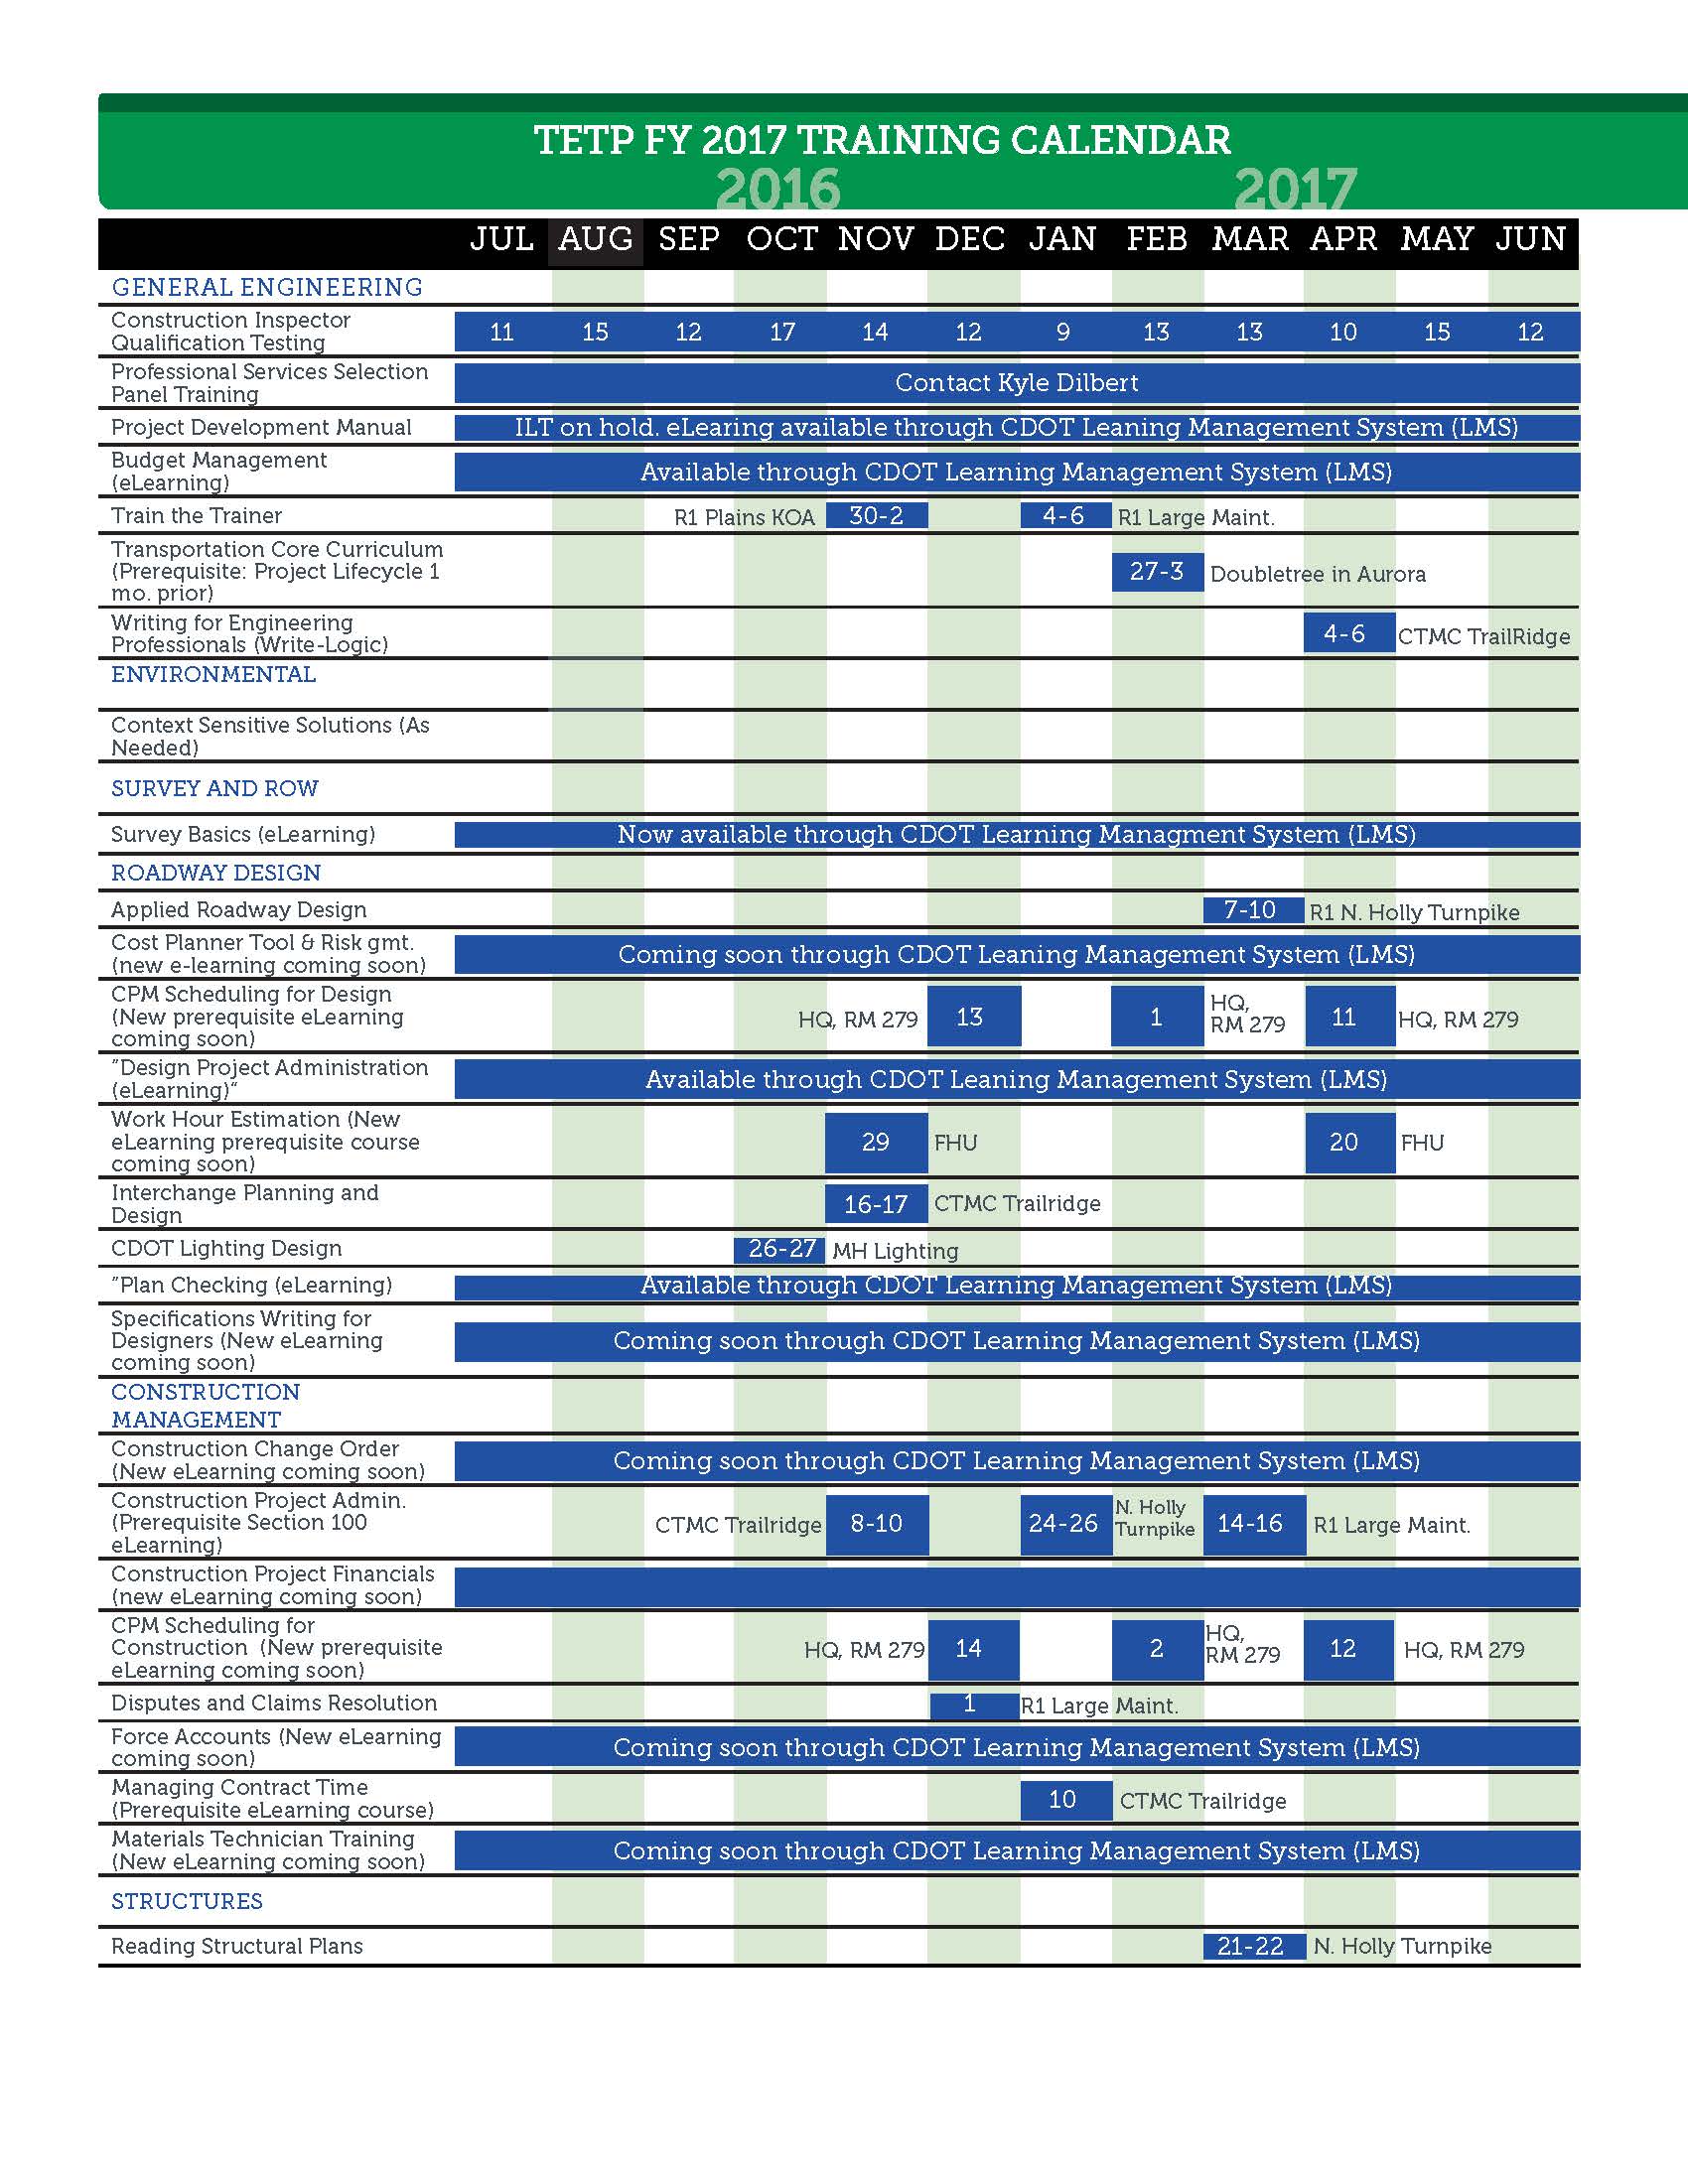 TETP Schedule 2016 2017 detail image